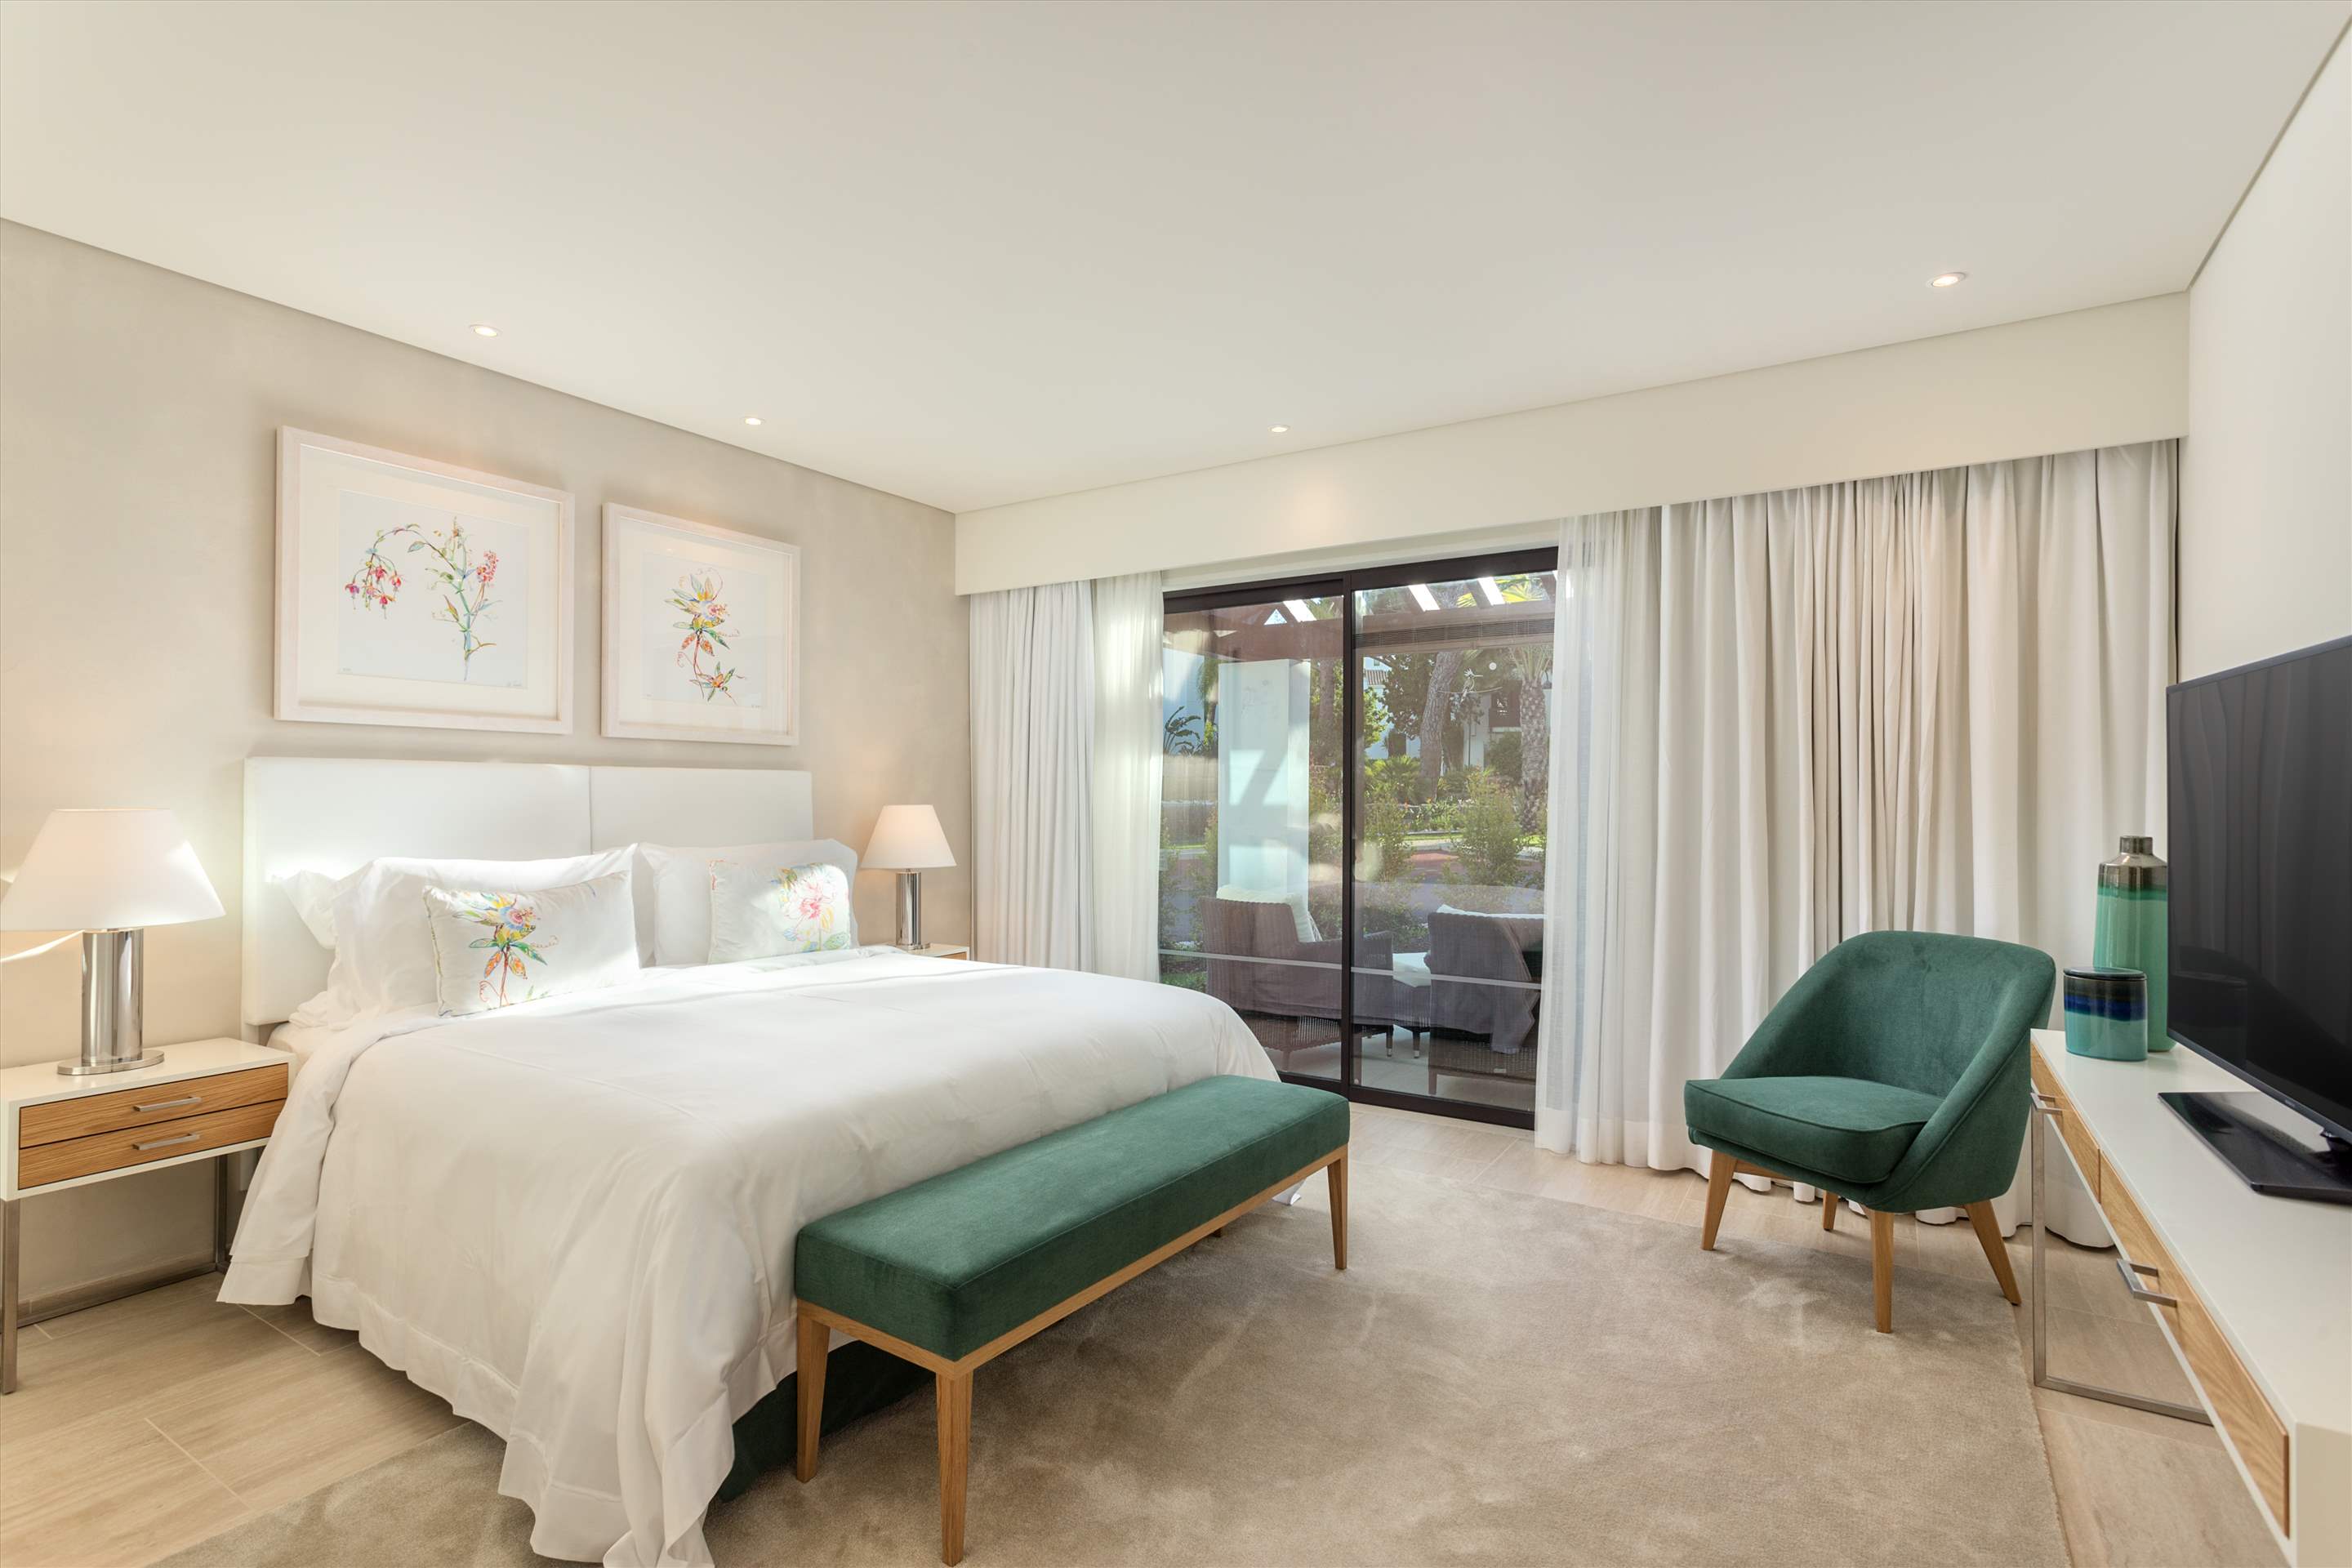 Pine Cliffs Gardens, Two Bedroom Suite, S/C Basis, 2 bedroom apartment in Pine Cliffs Resort, Algarve Photo #20